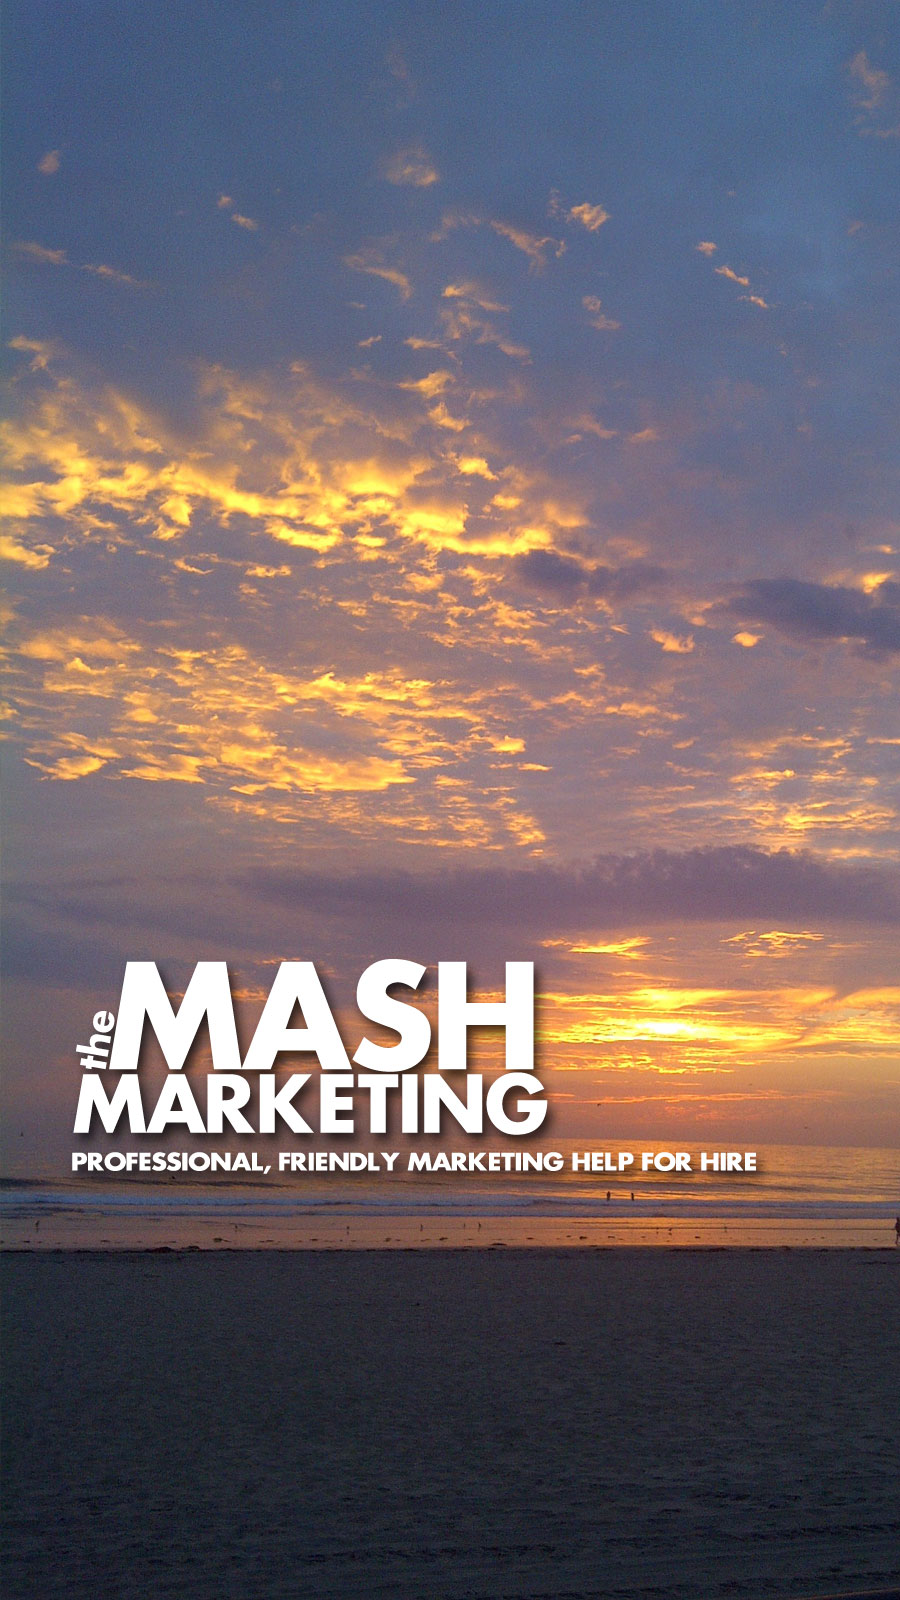 The MASH Marketing Blog